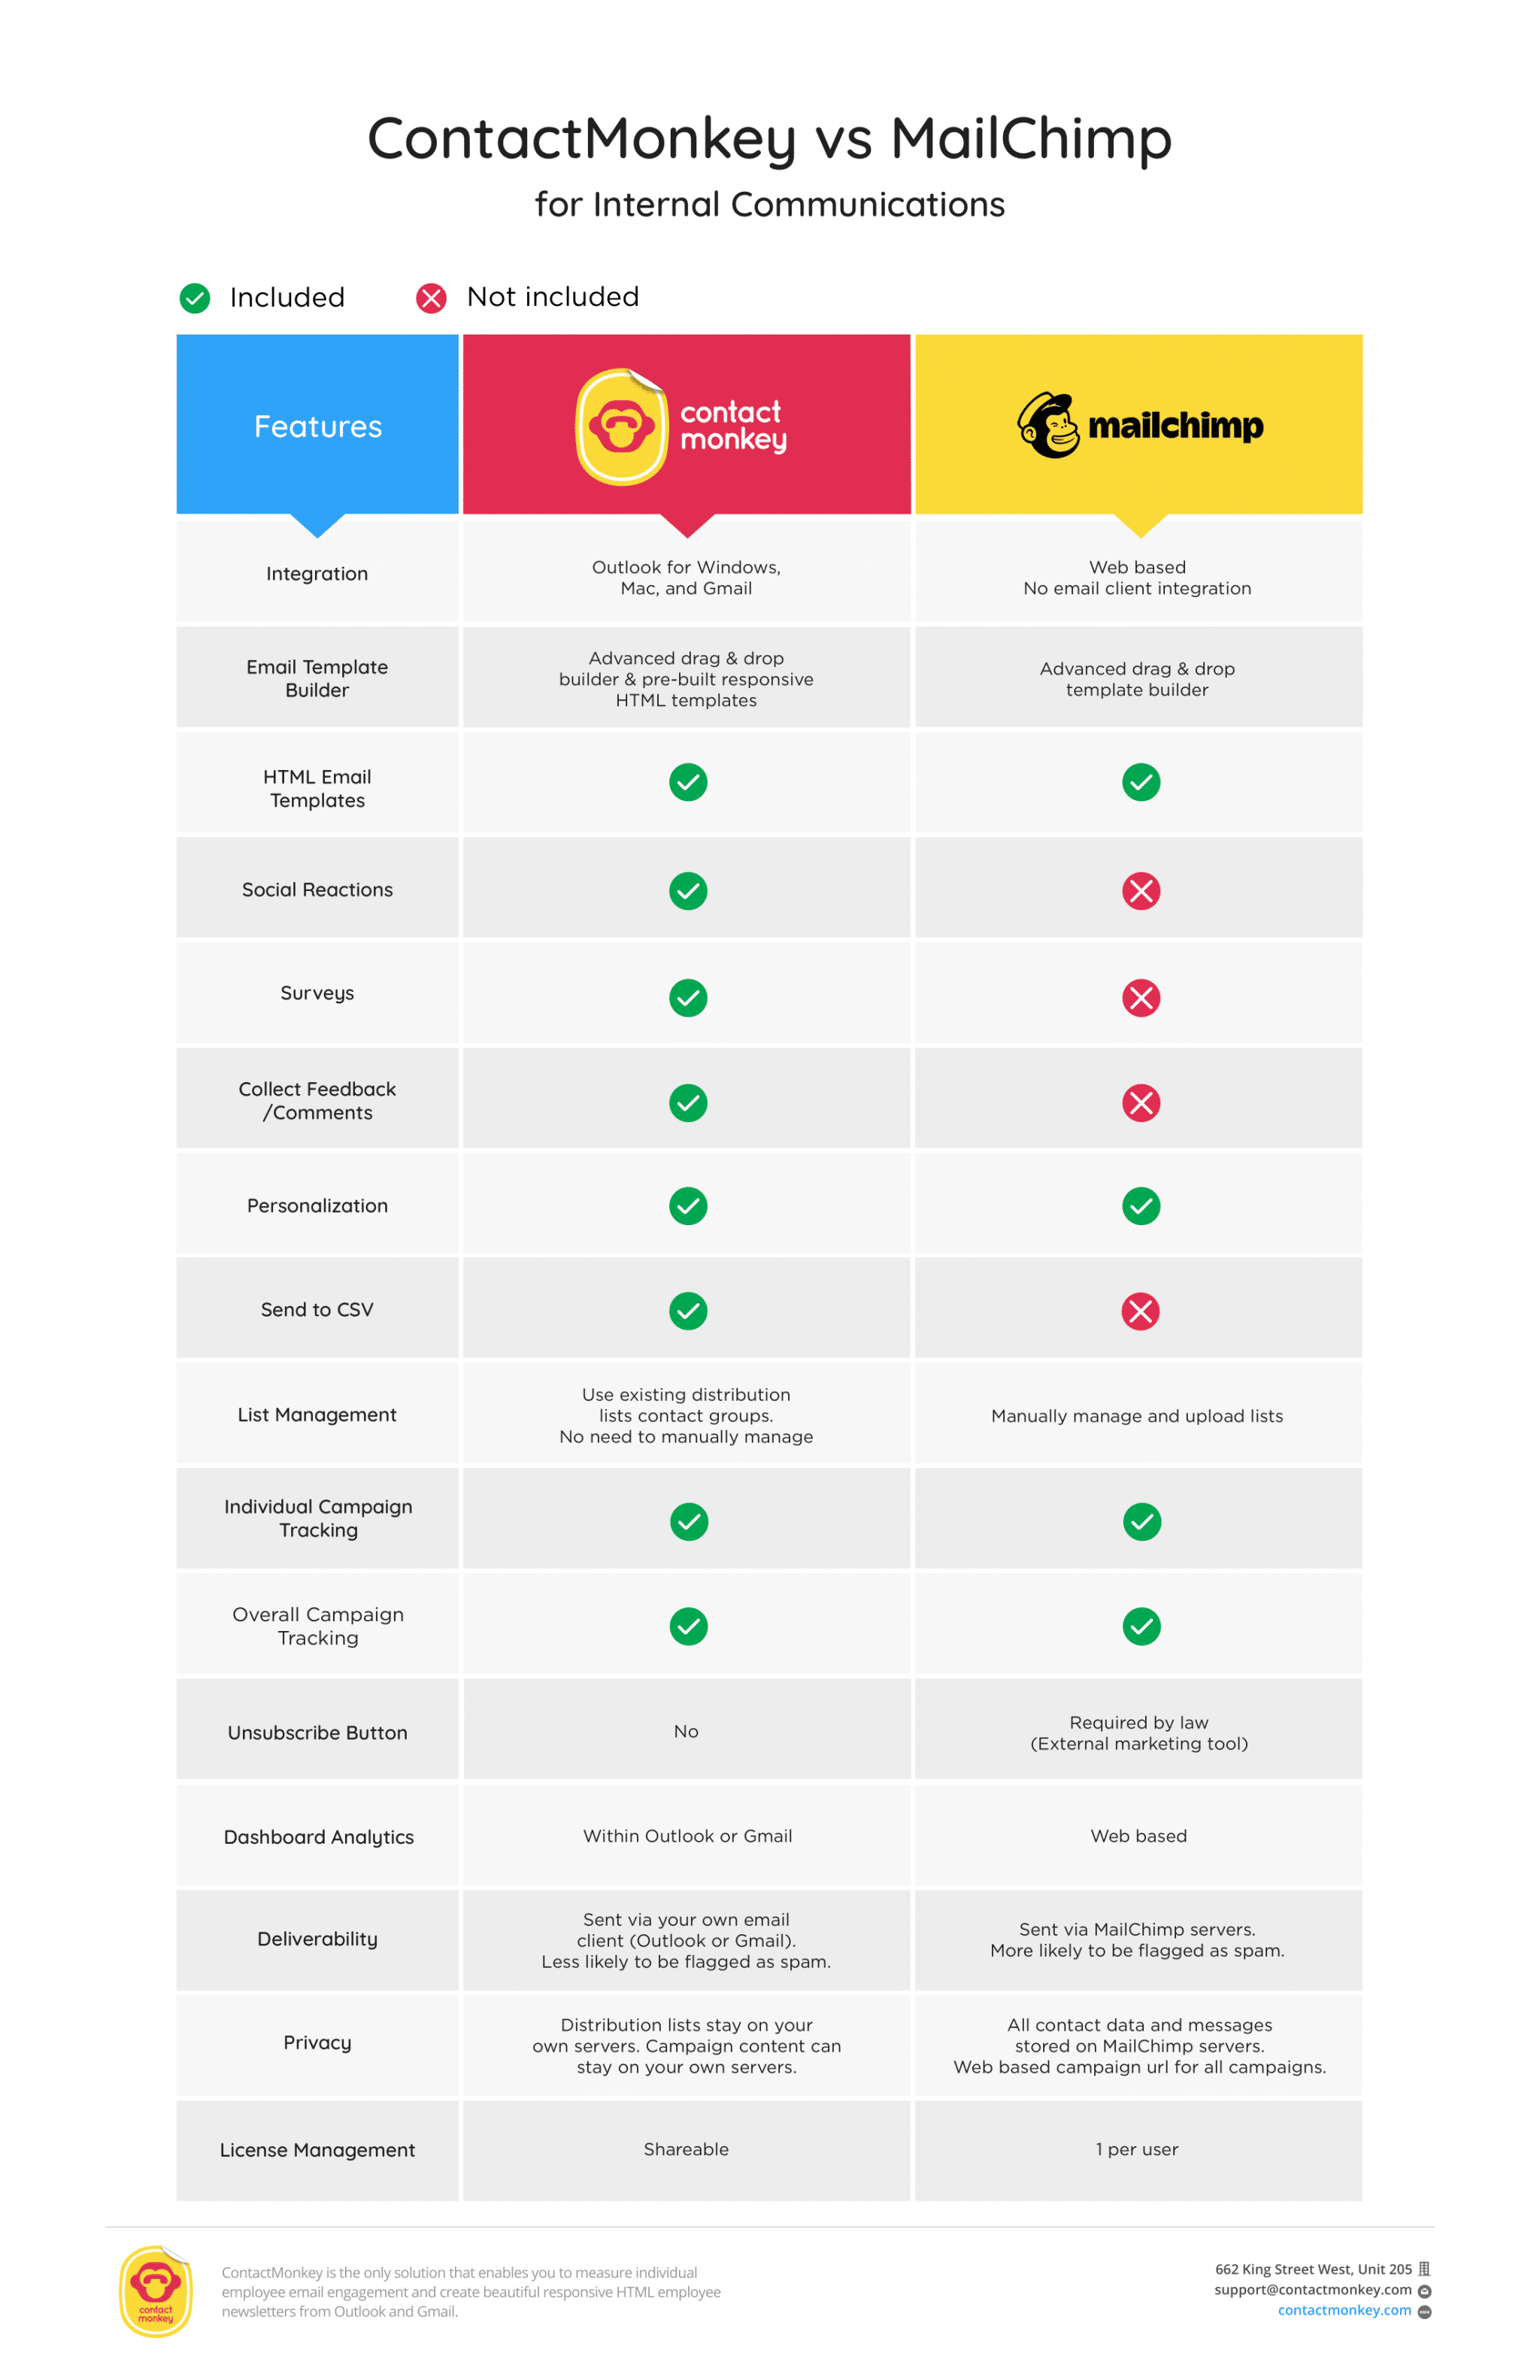 Image of ContactMonkey vs. Mailchimp comparison chart for internal communications.